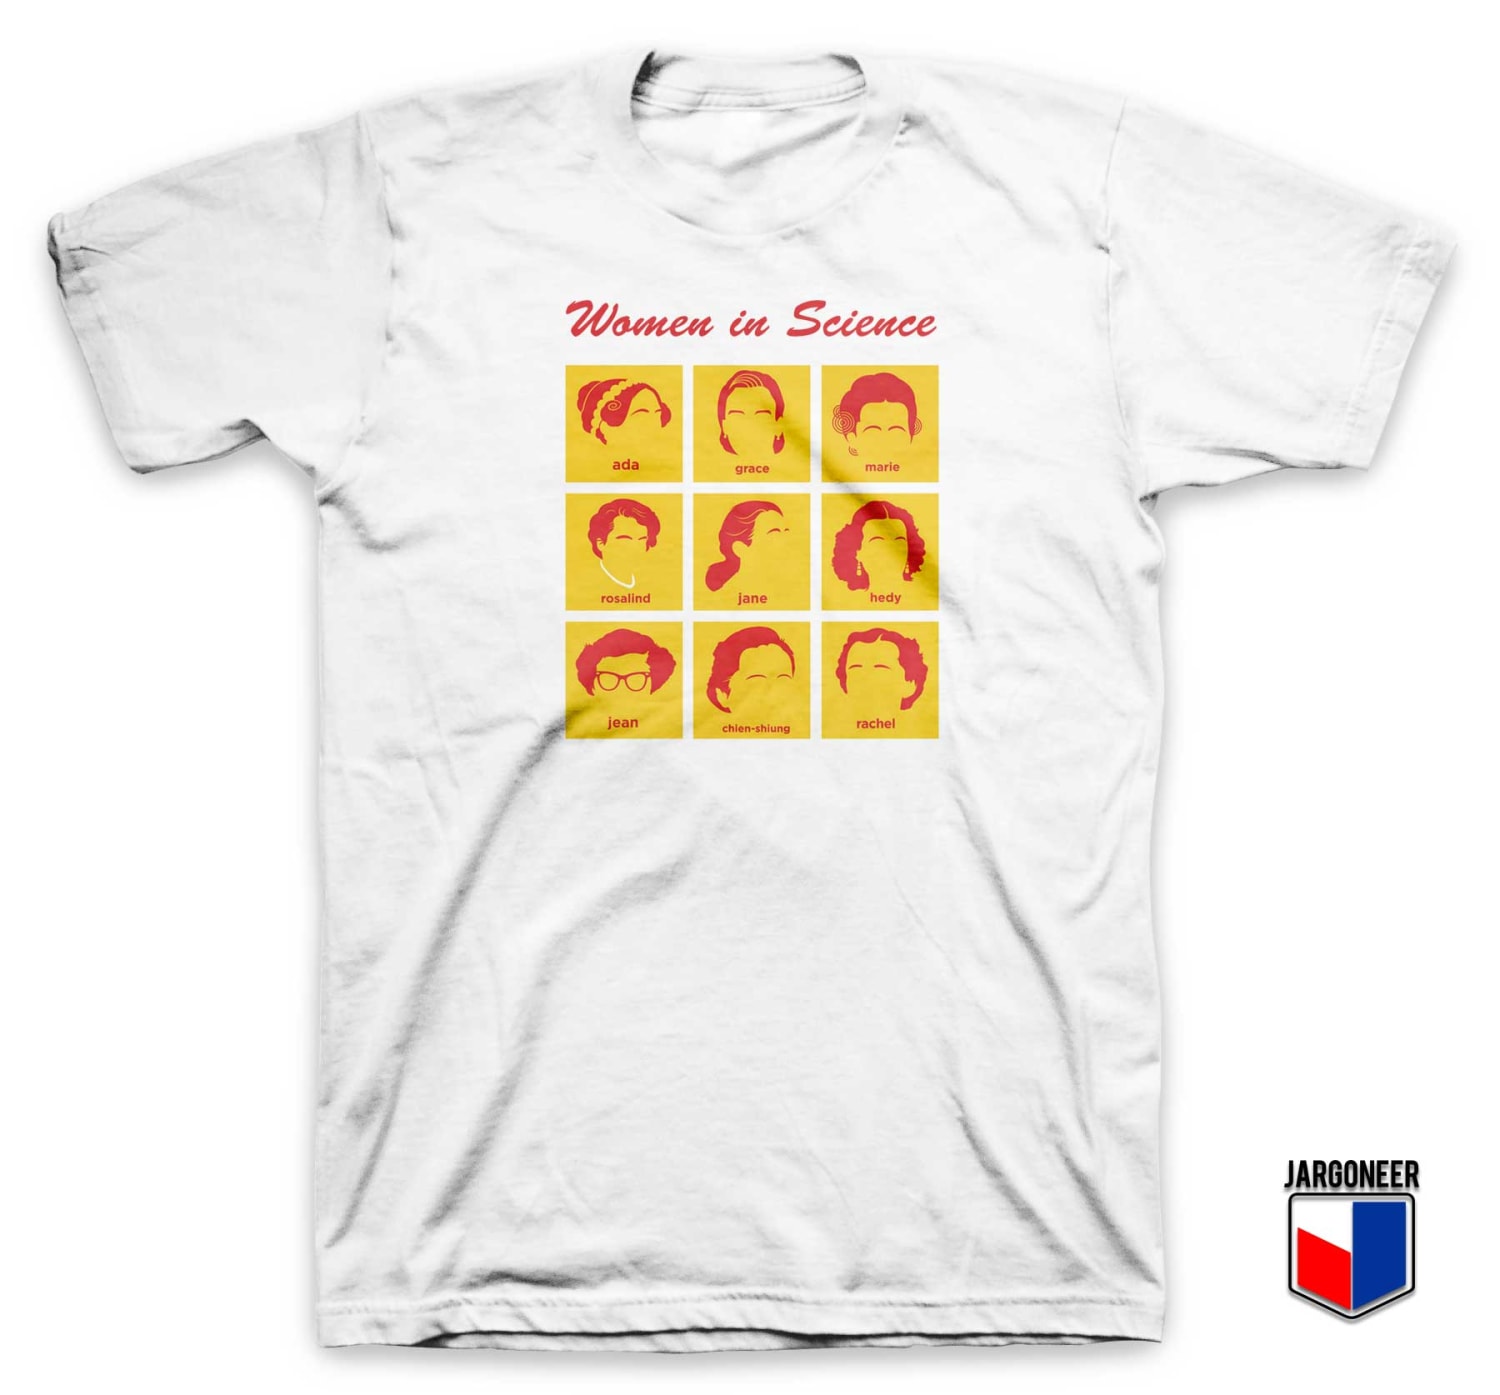 Women in Science T Shirt - Design By jargoneer.com